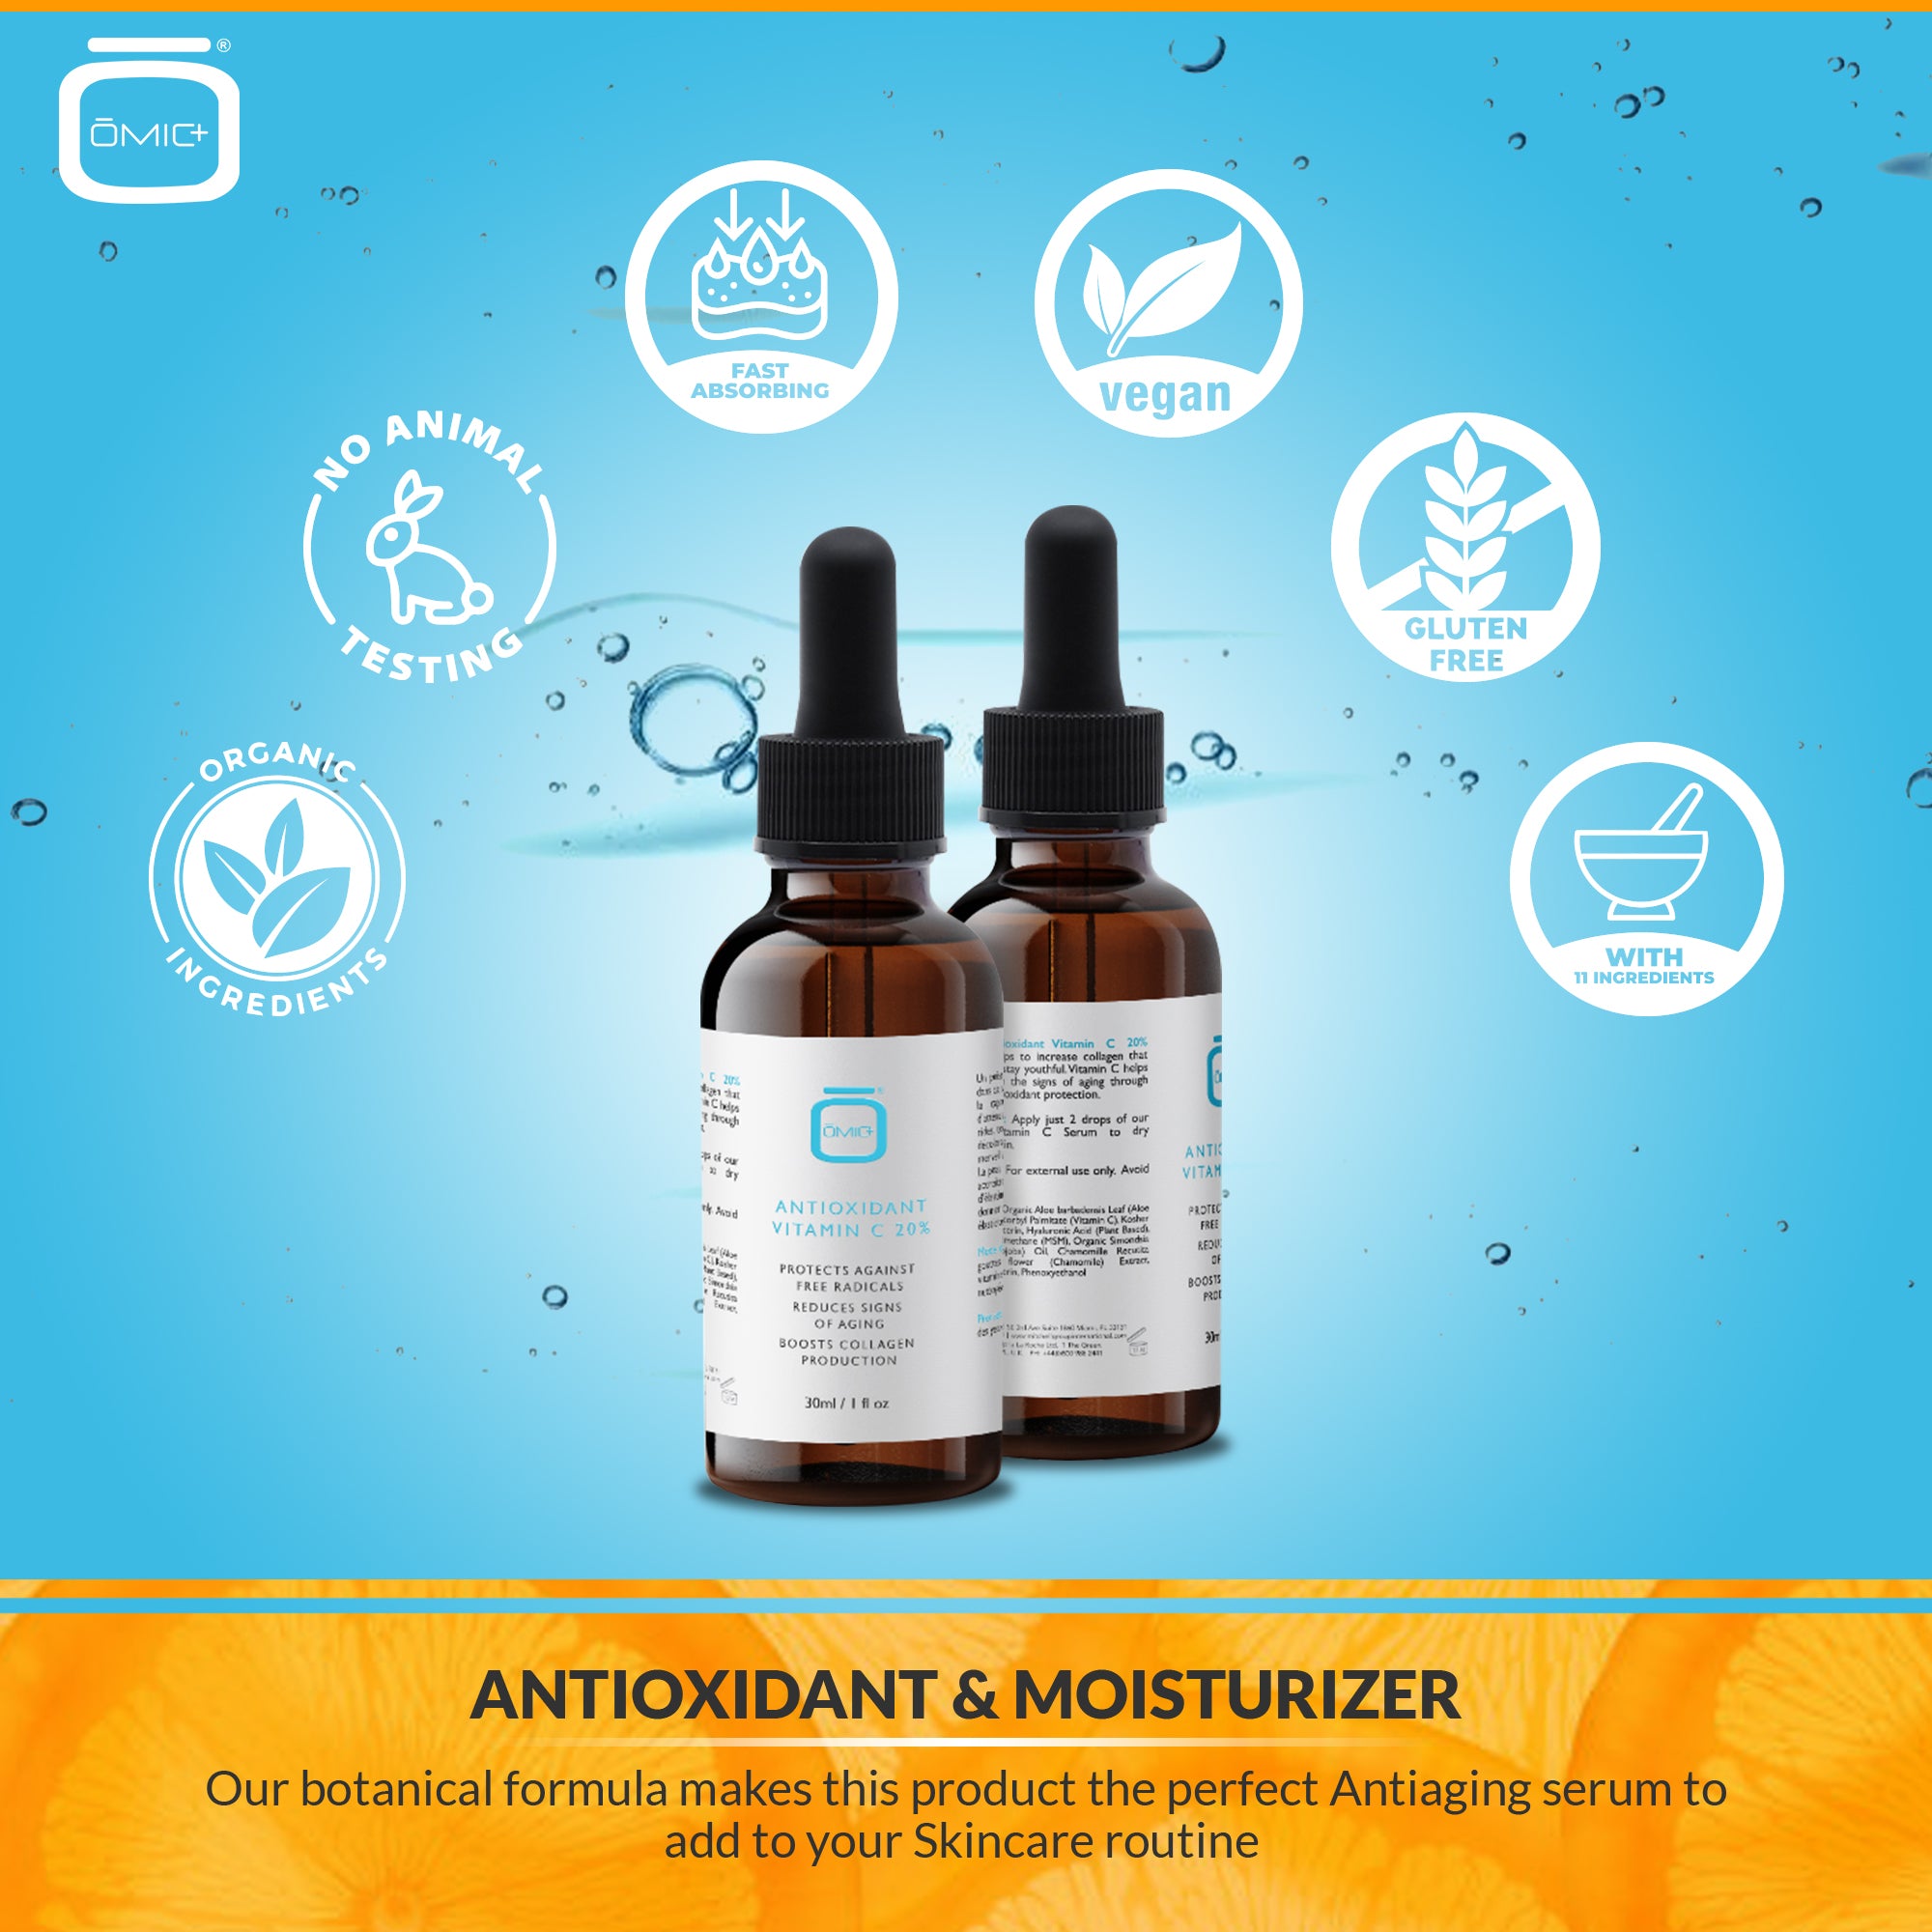 US Omic+ Antioxidant Vit C 30ml